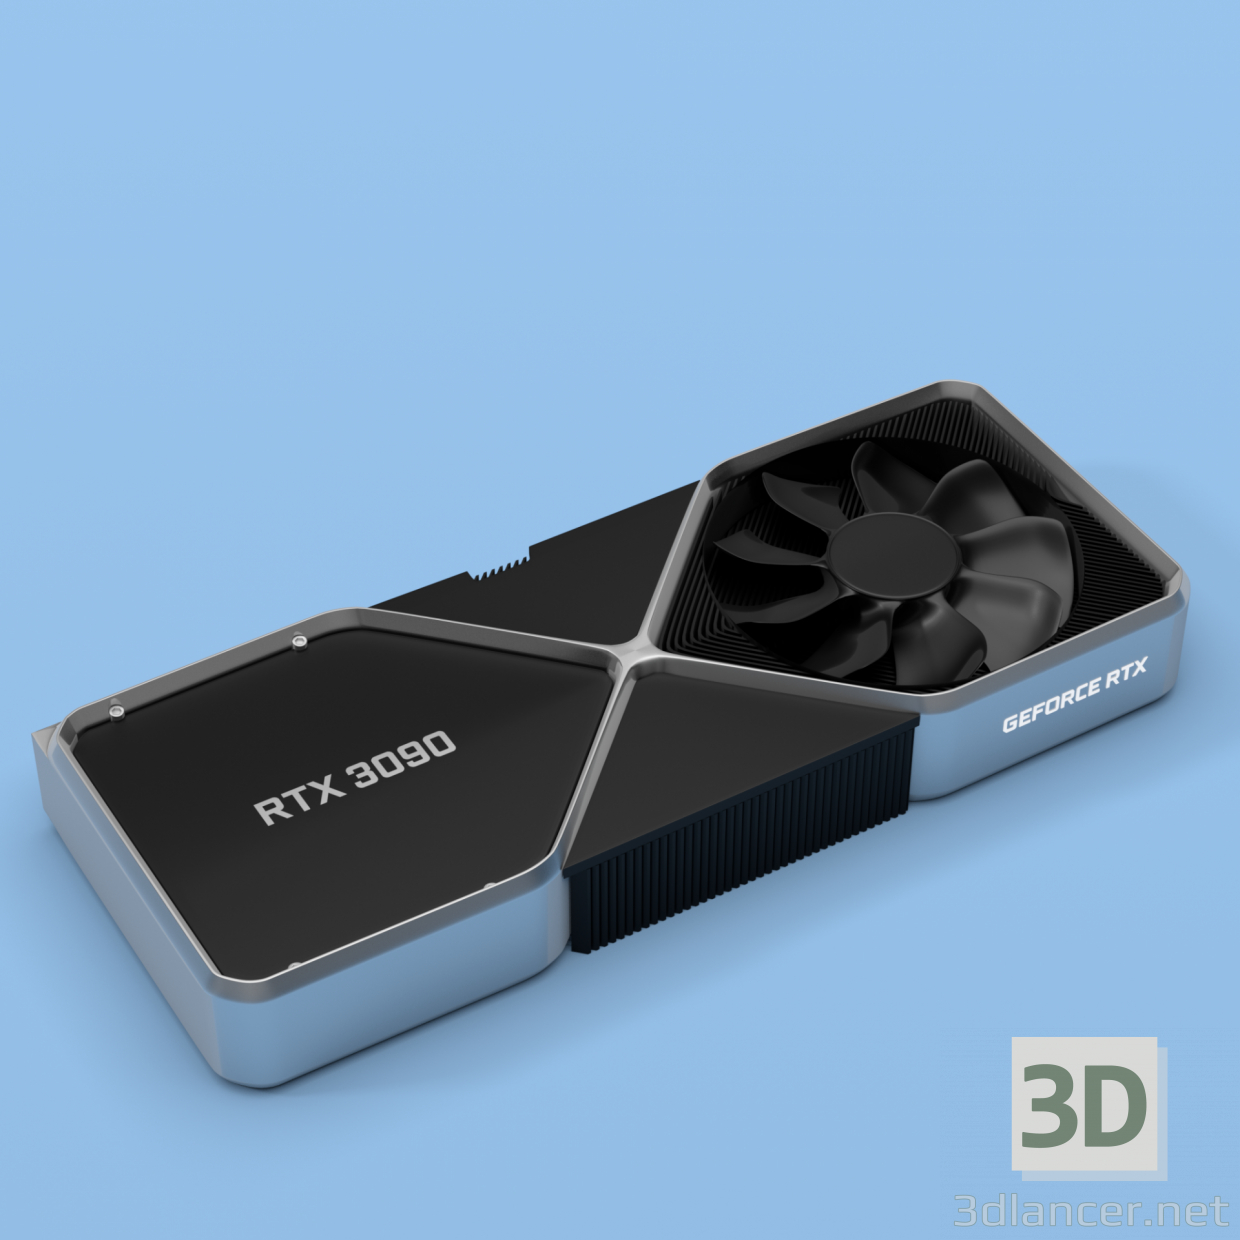 3d Nvidia Geforce RTX 3090 Graphics Card model buy - render